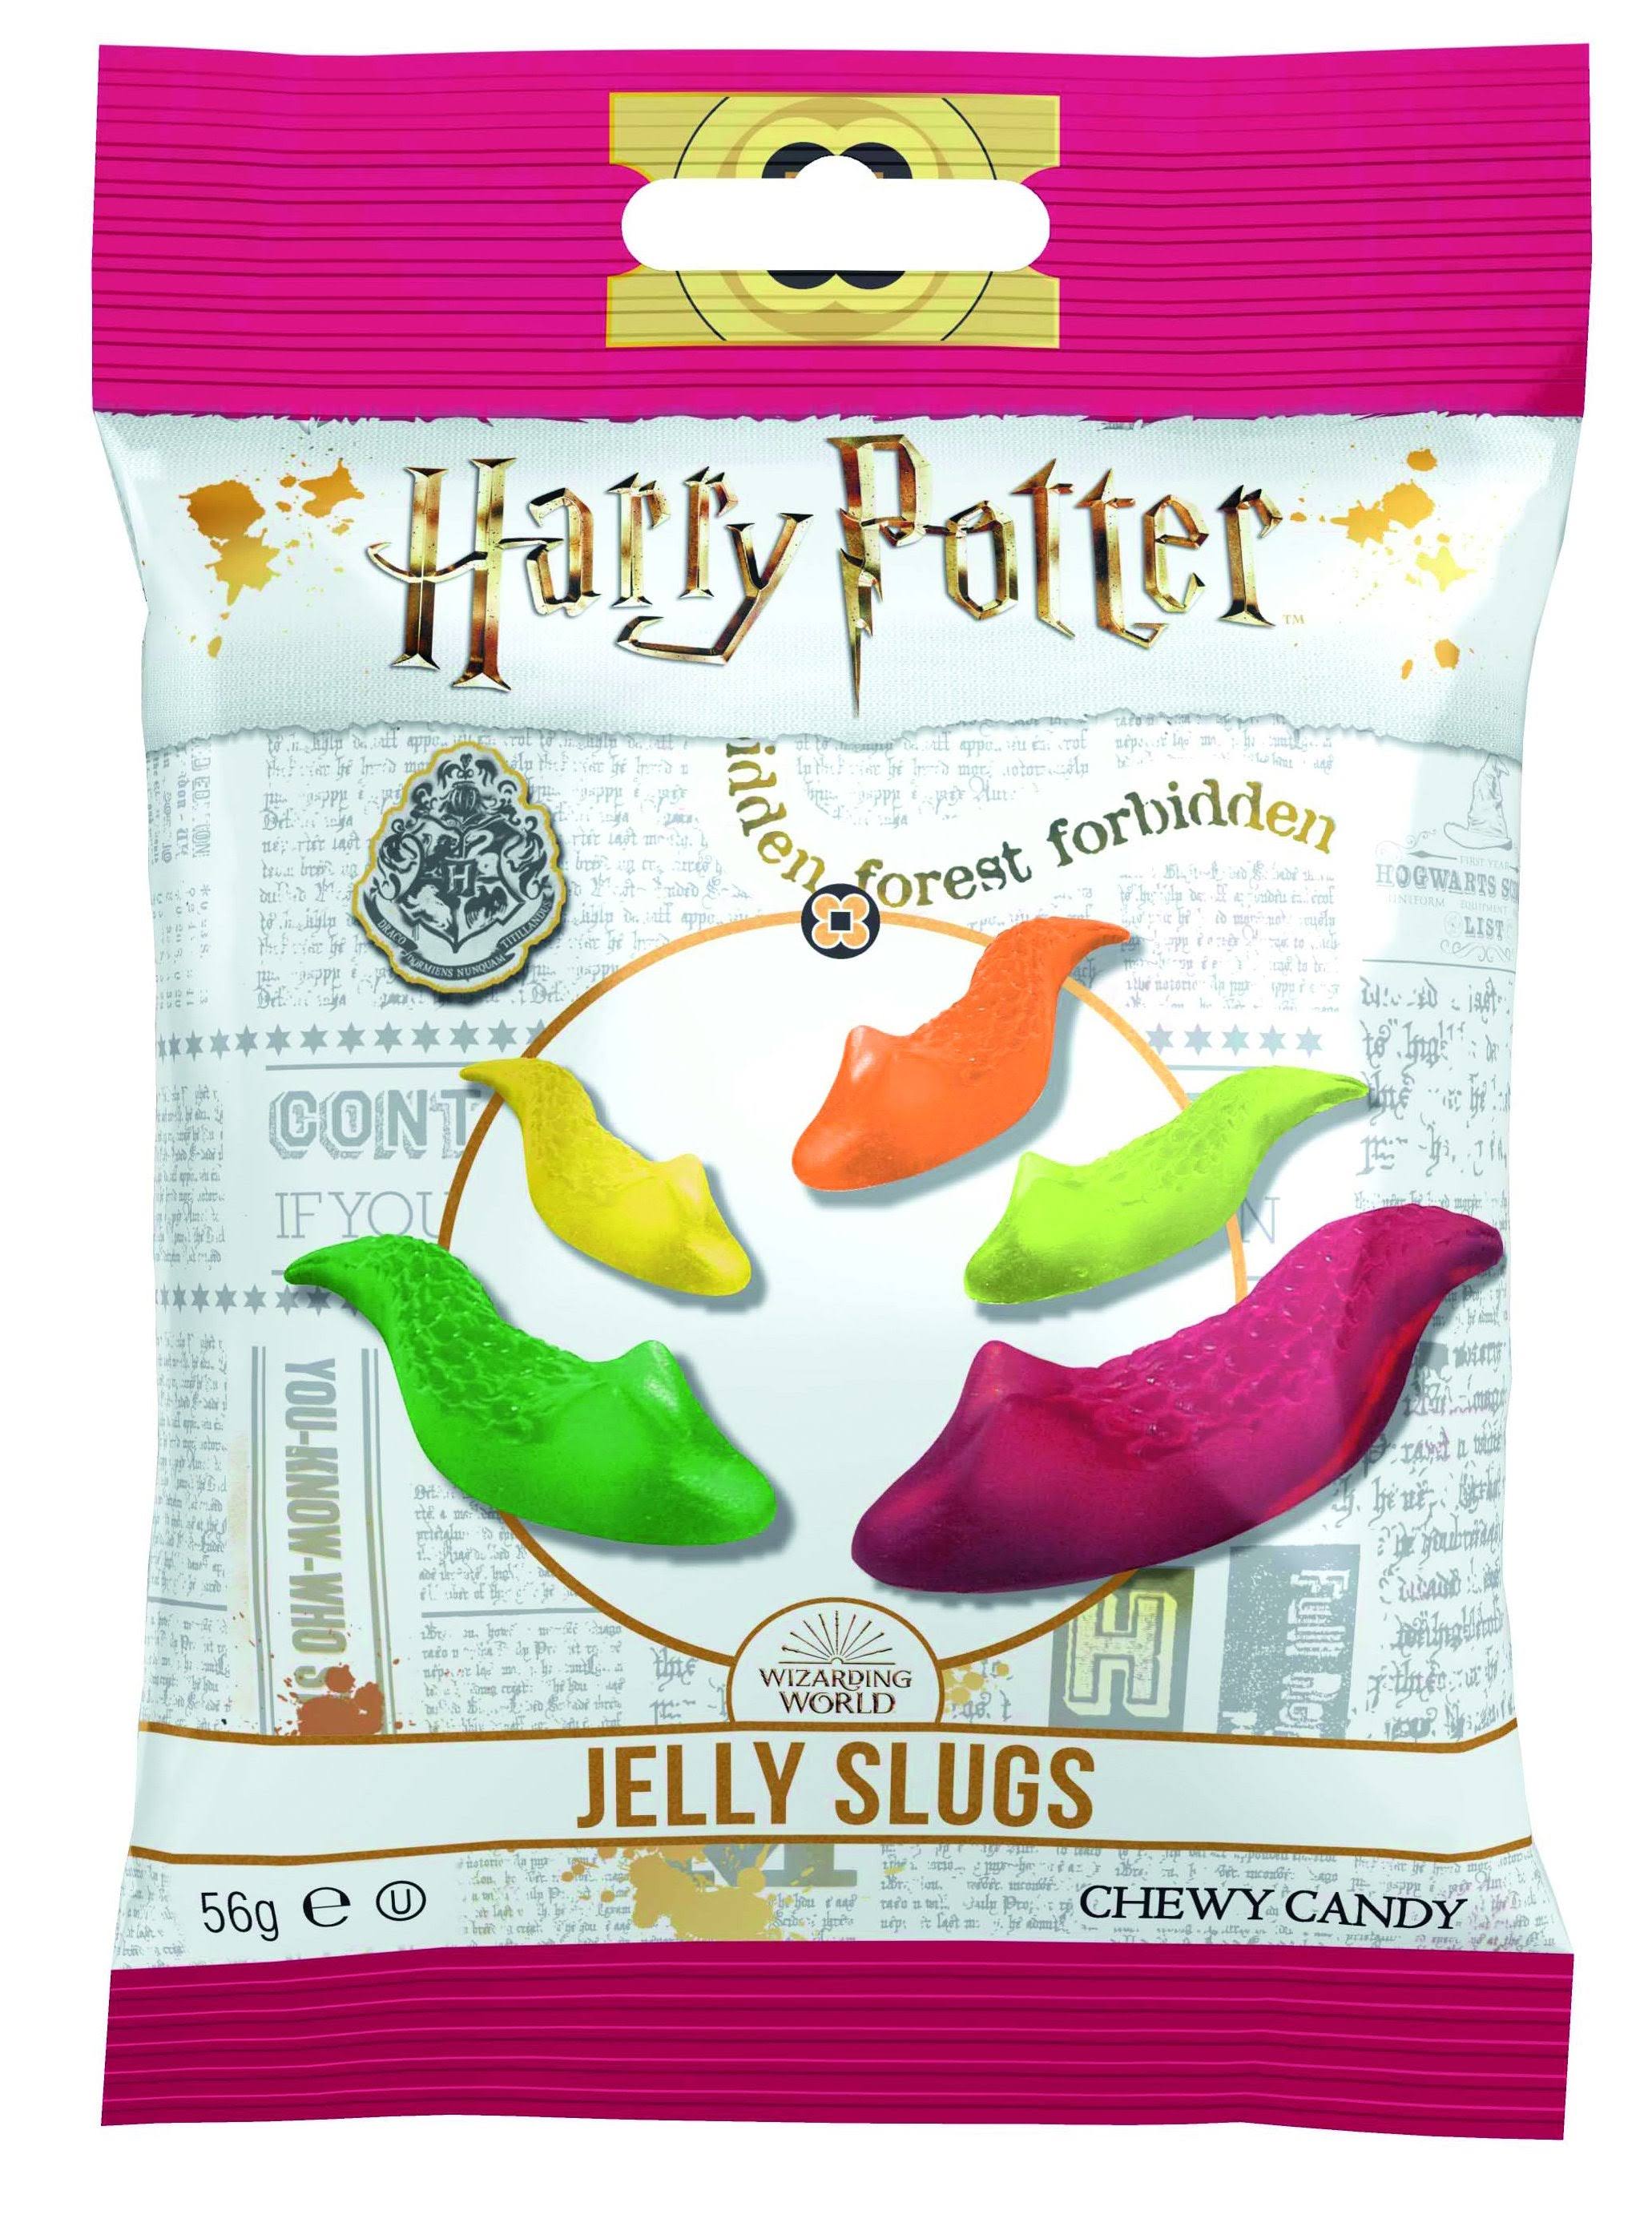 Harry Potter Gummi Candy - Jelly Slugs, 2.1oz